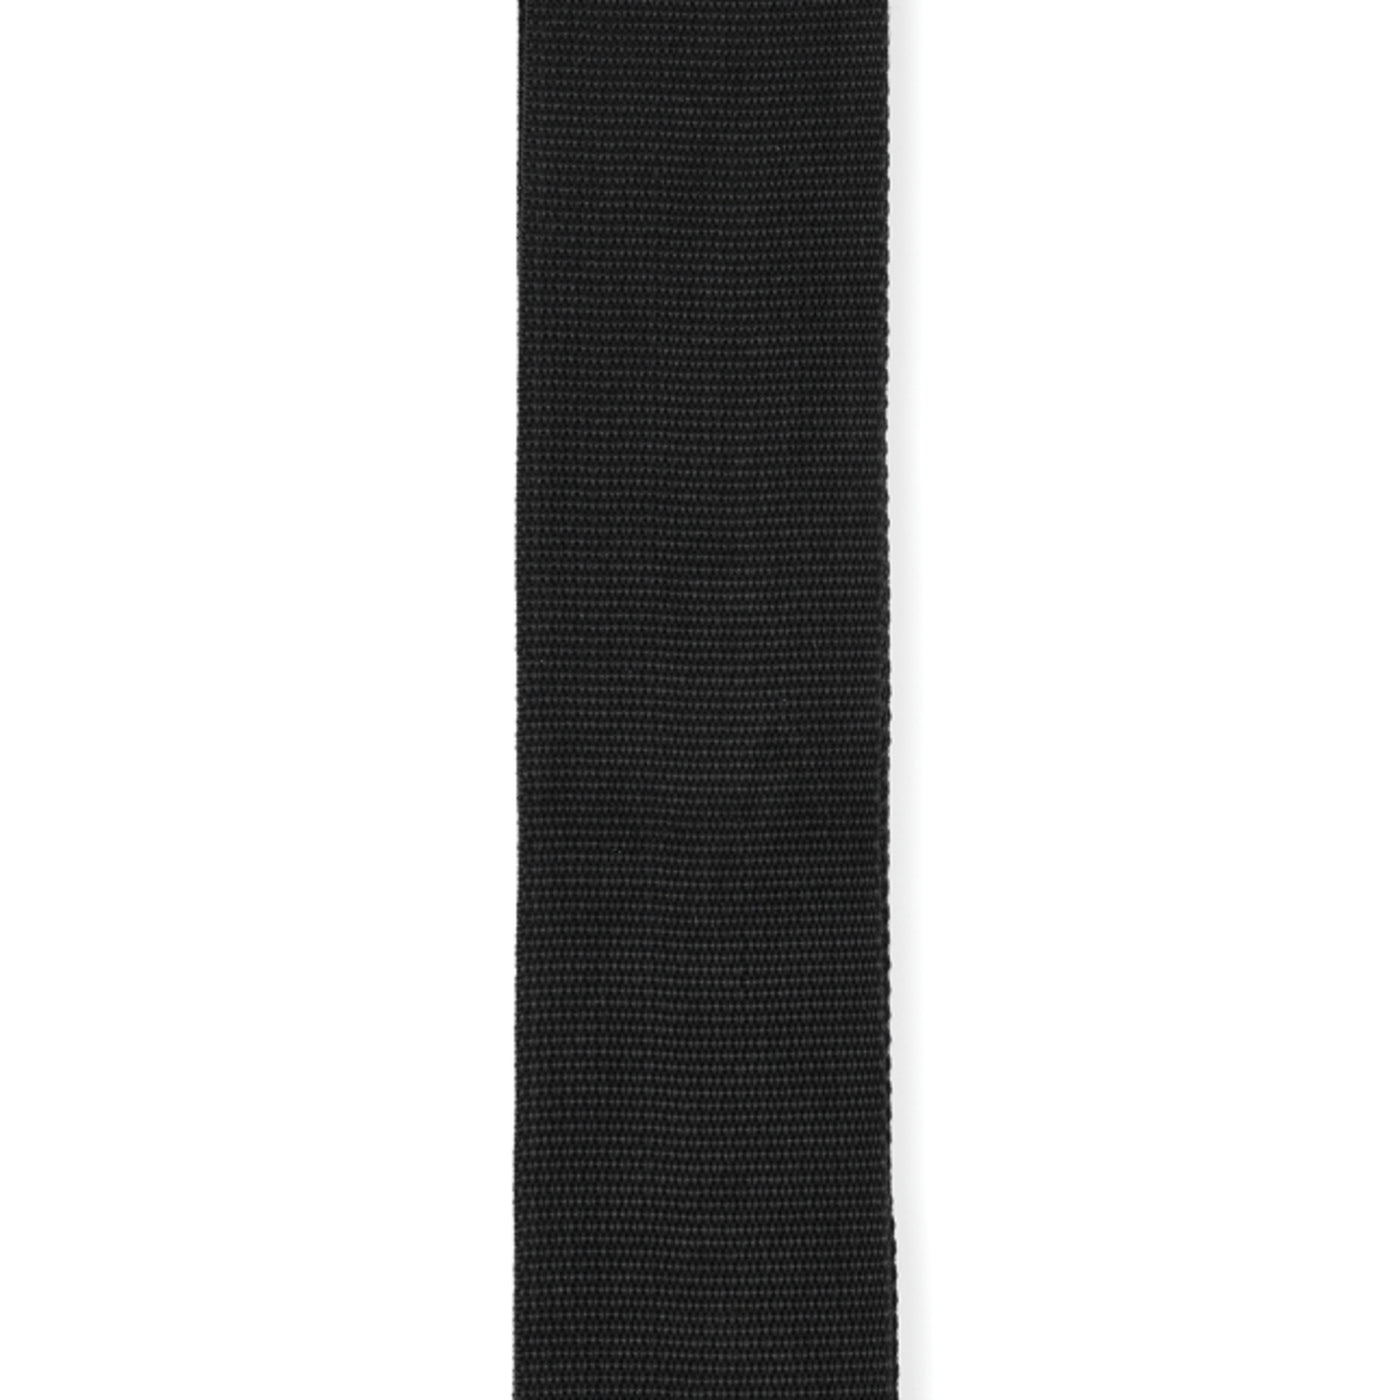 D'Addario Bass Guitar Strap, Black, 3-Inches Wide (75B000)